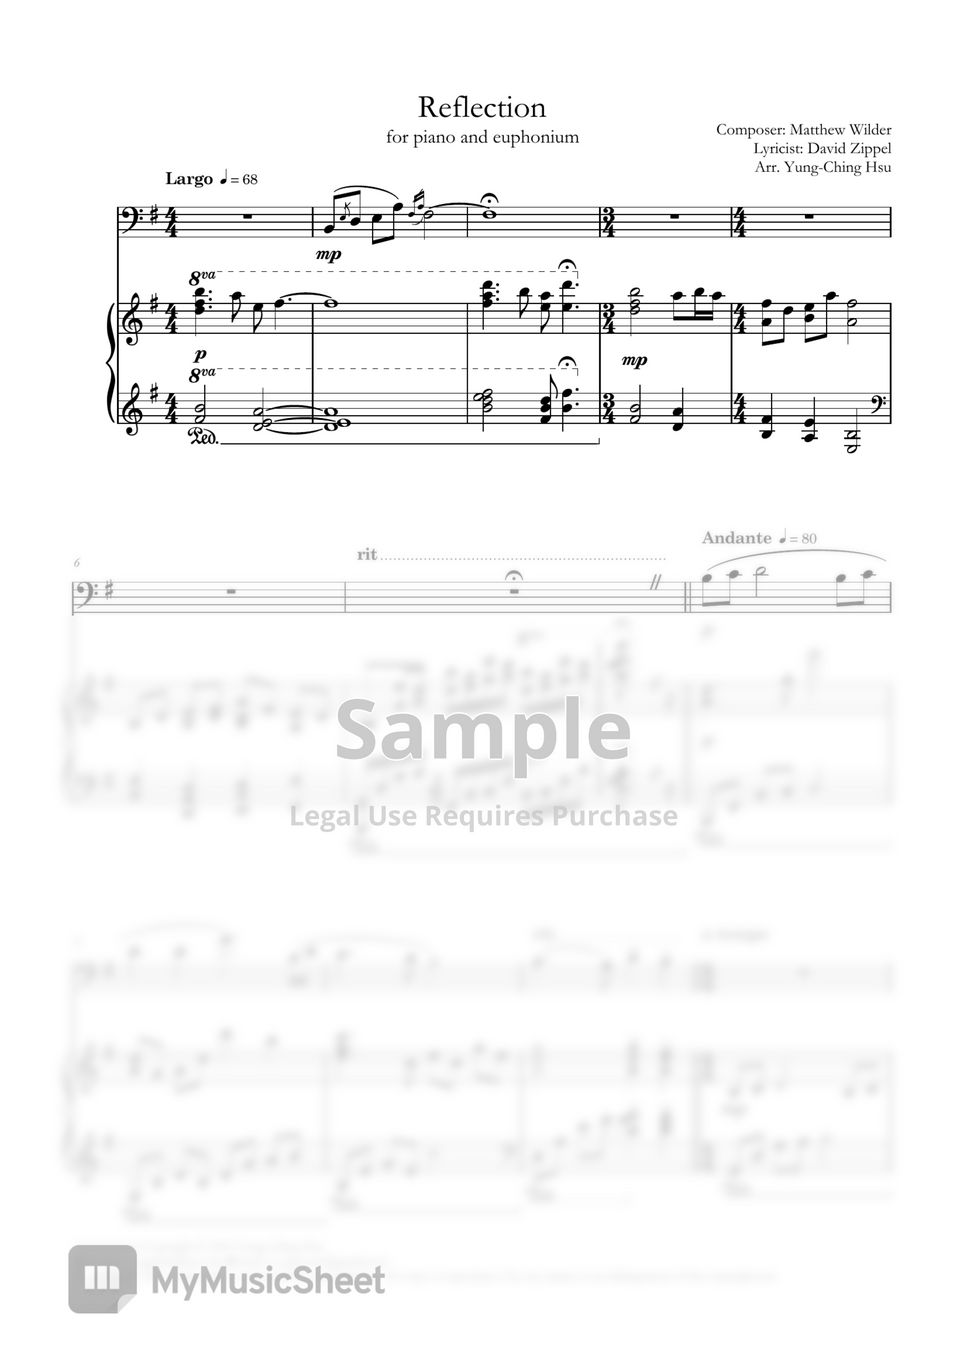 Matthew Wilder - Mulan: Reflection (for Euphonium and Piano) by Yung-Ching Hsu